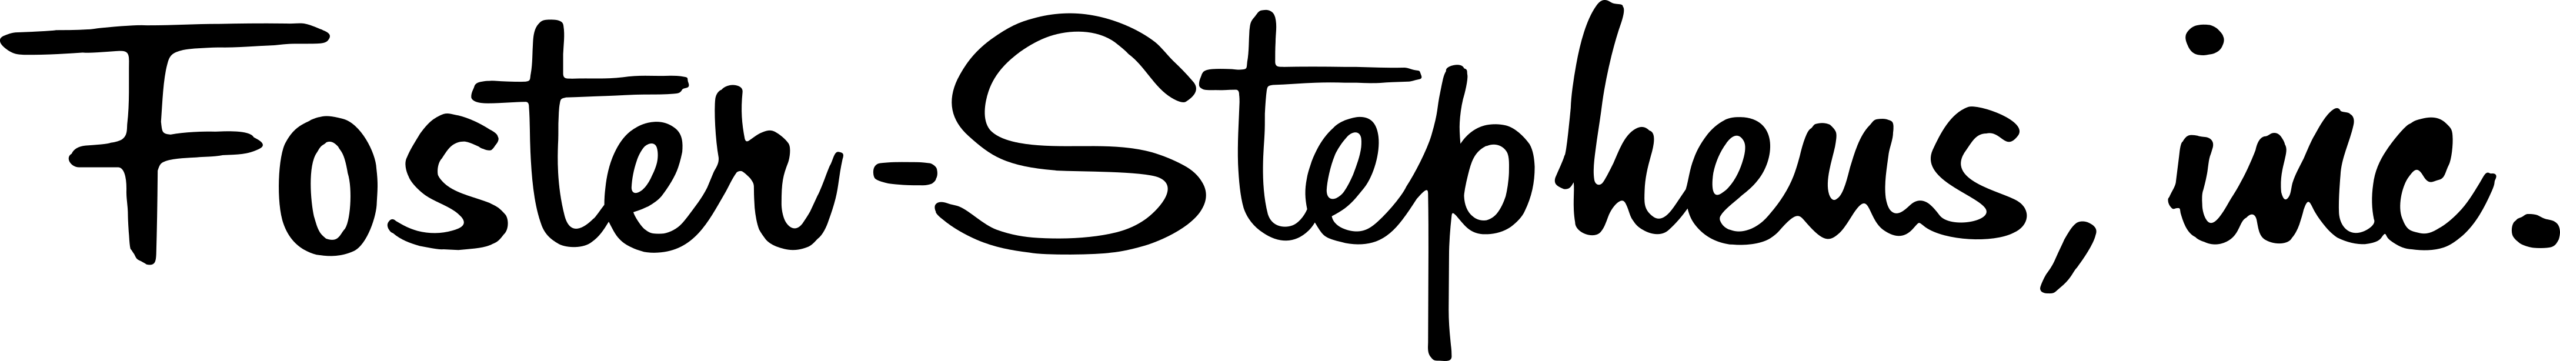 Foster-Stephens logo